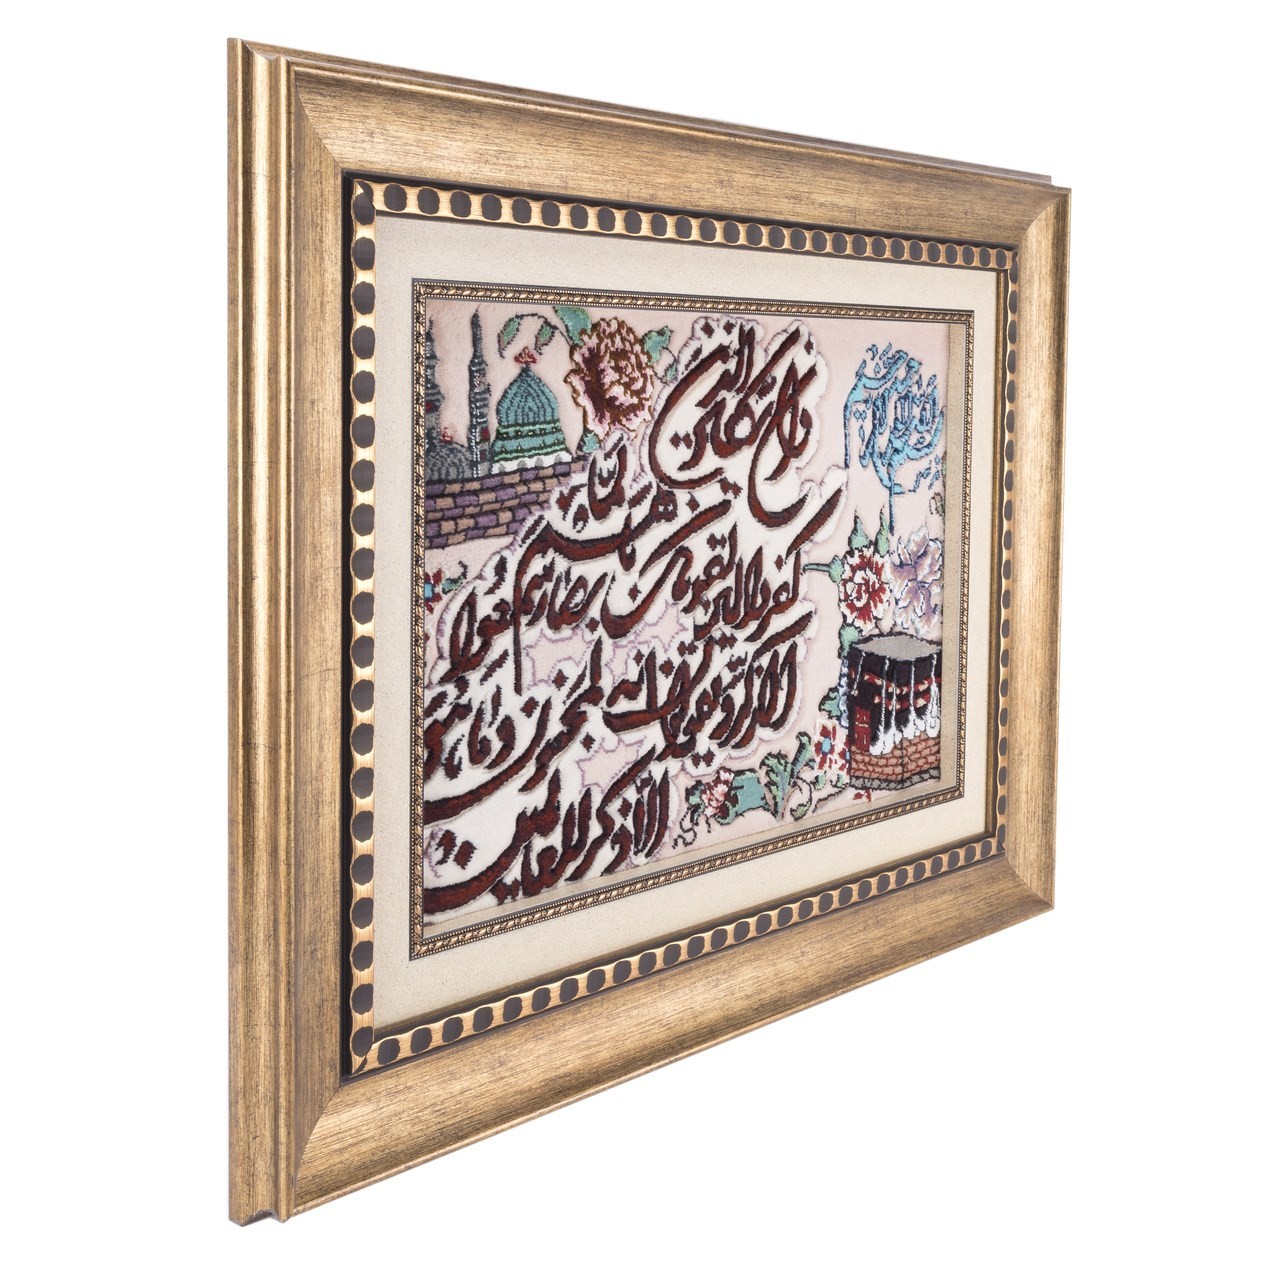 Pictorial Tabriz Carpet Ref: 901347